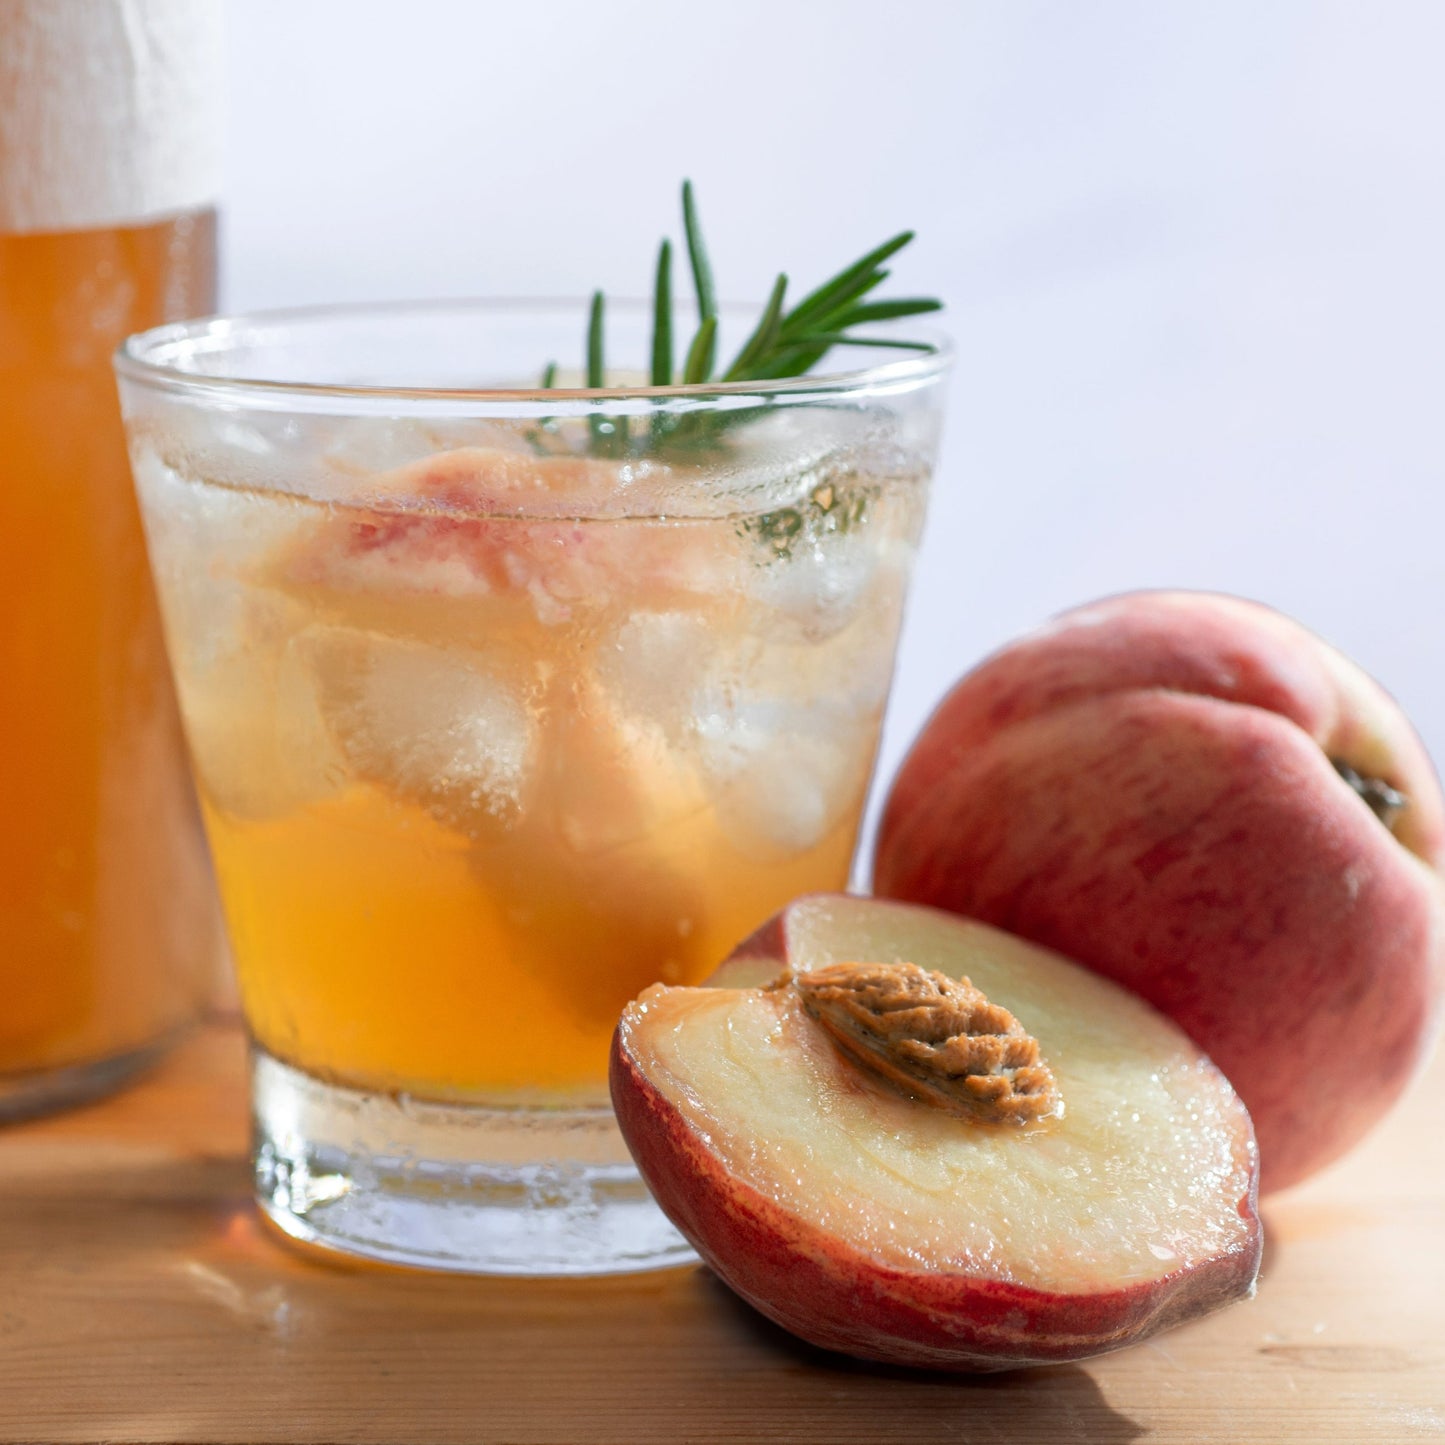 Peach Cider (32oz)